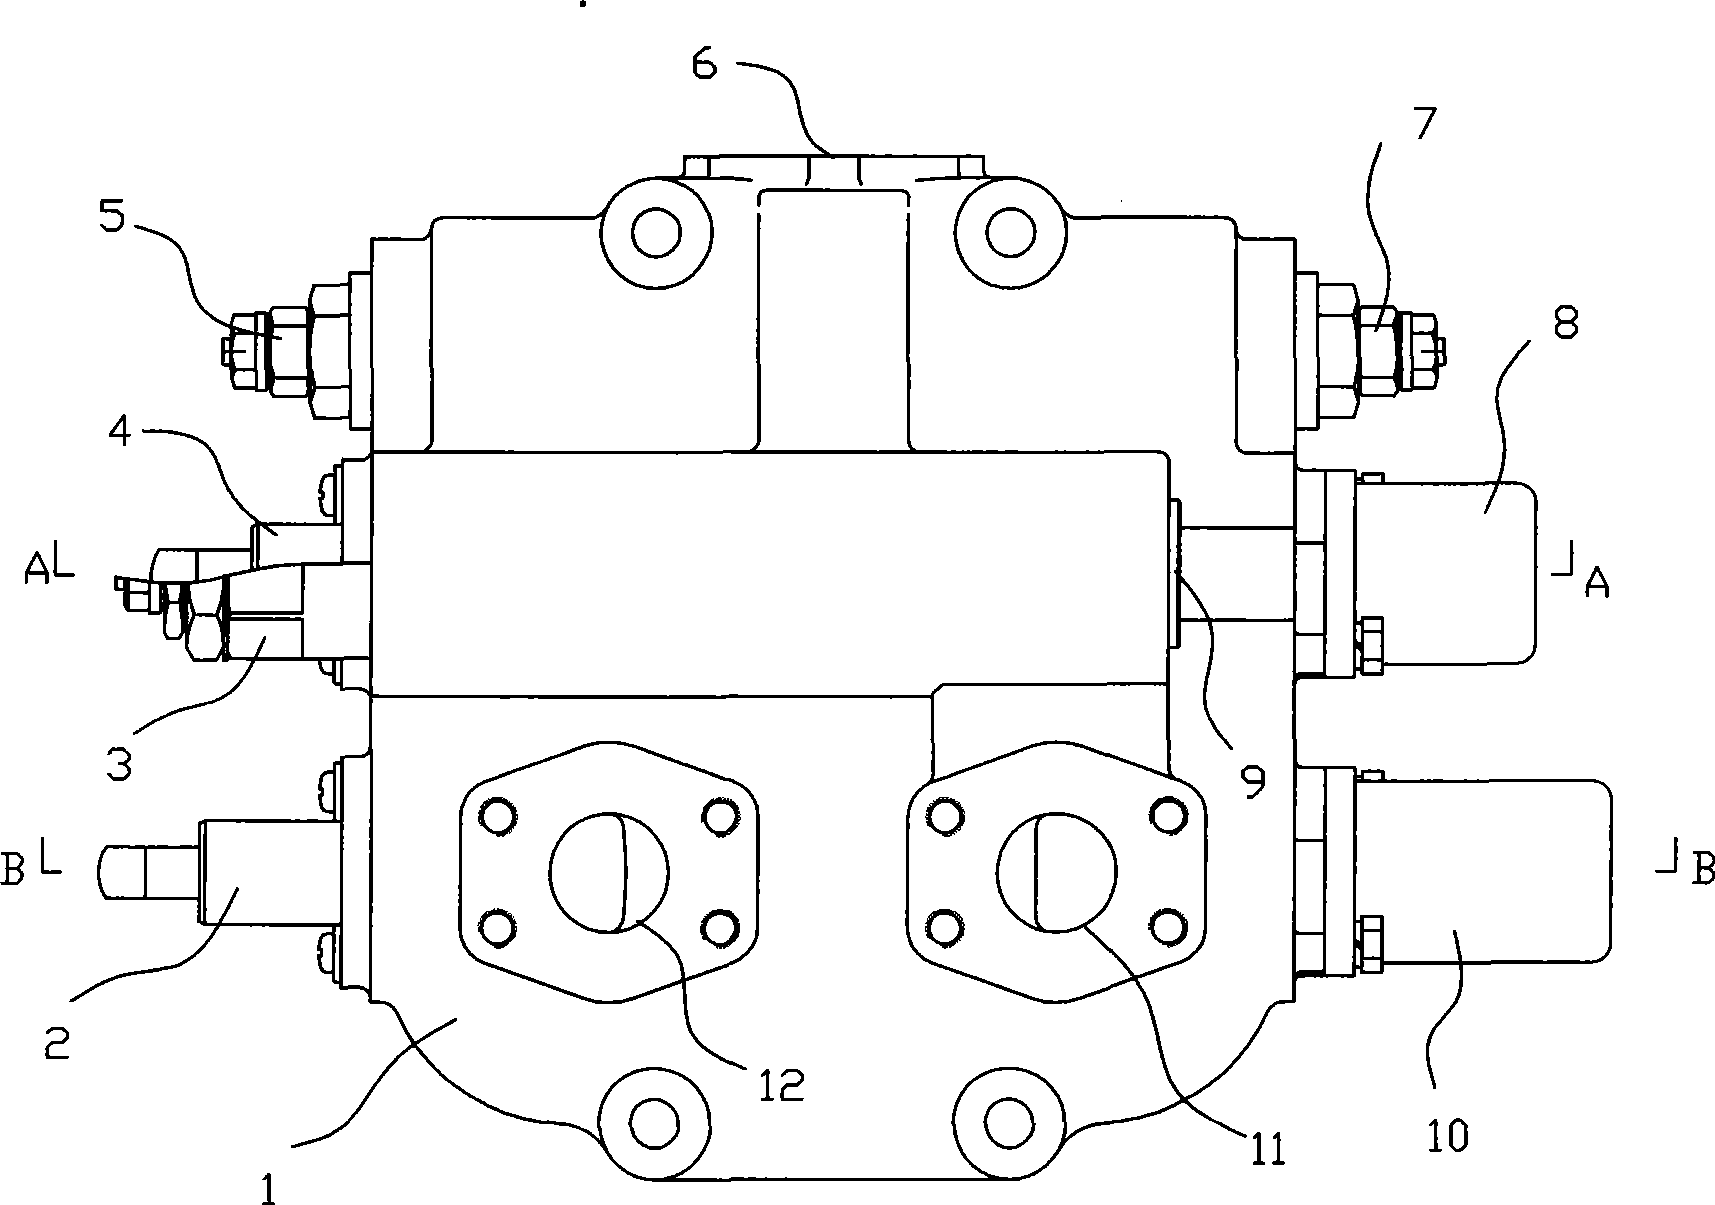 Integral manual multiple-way valve